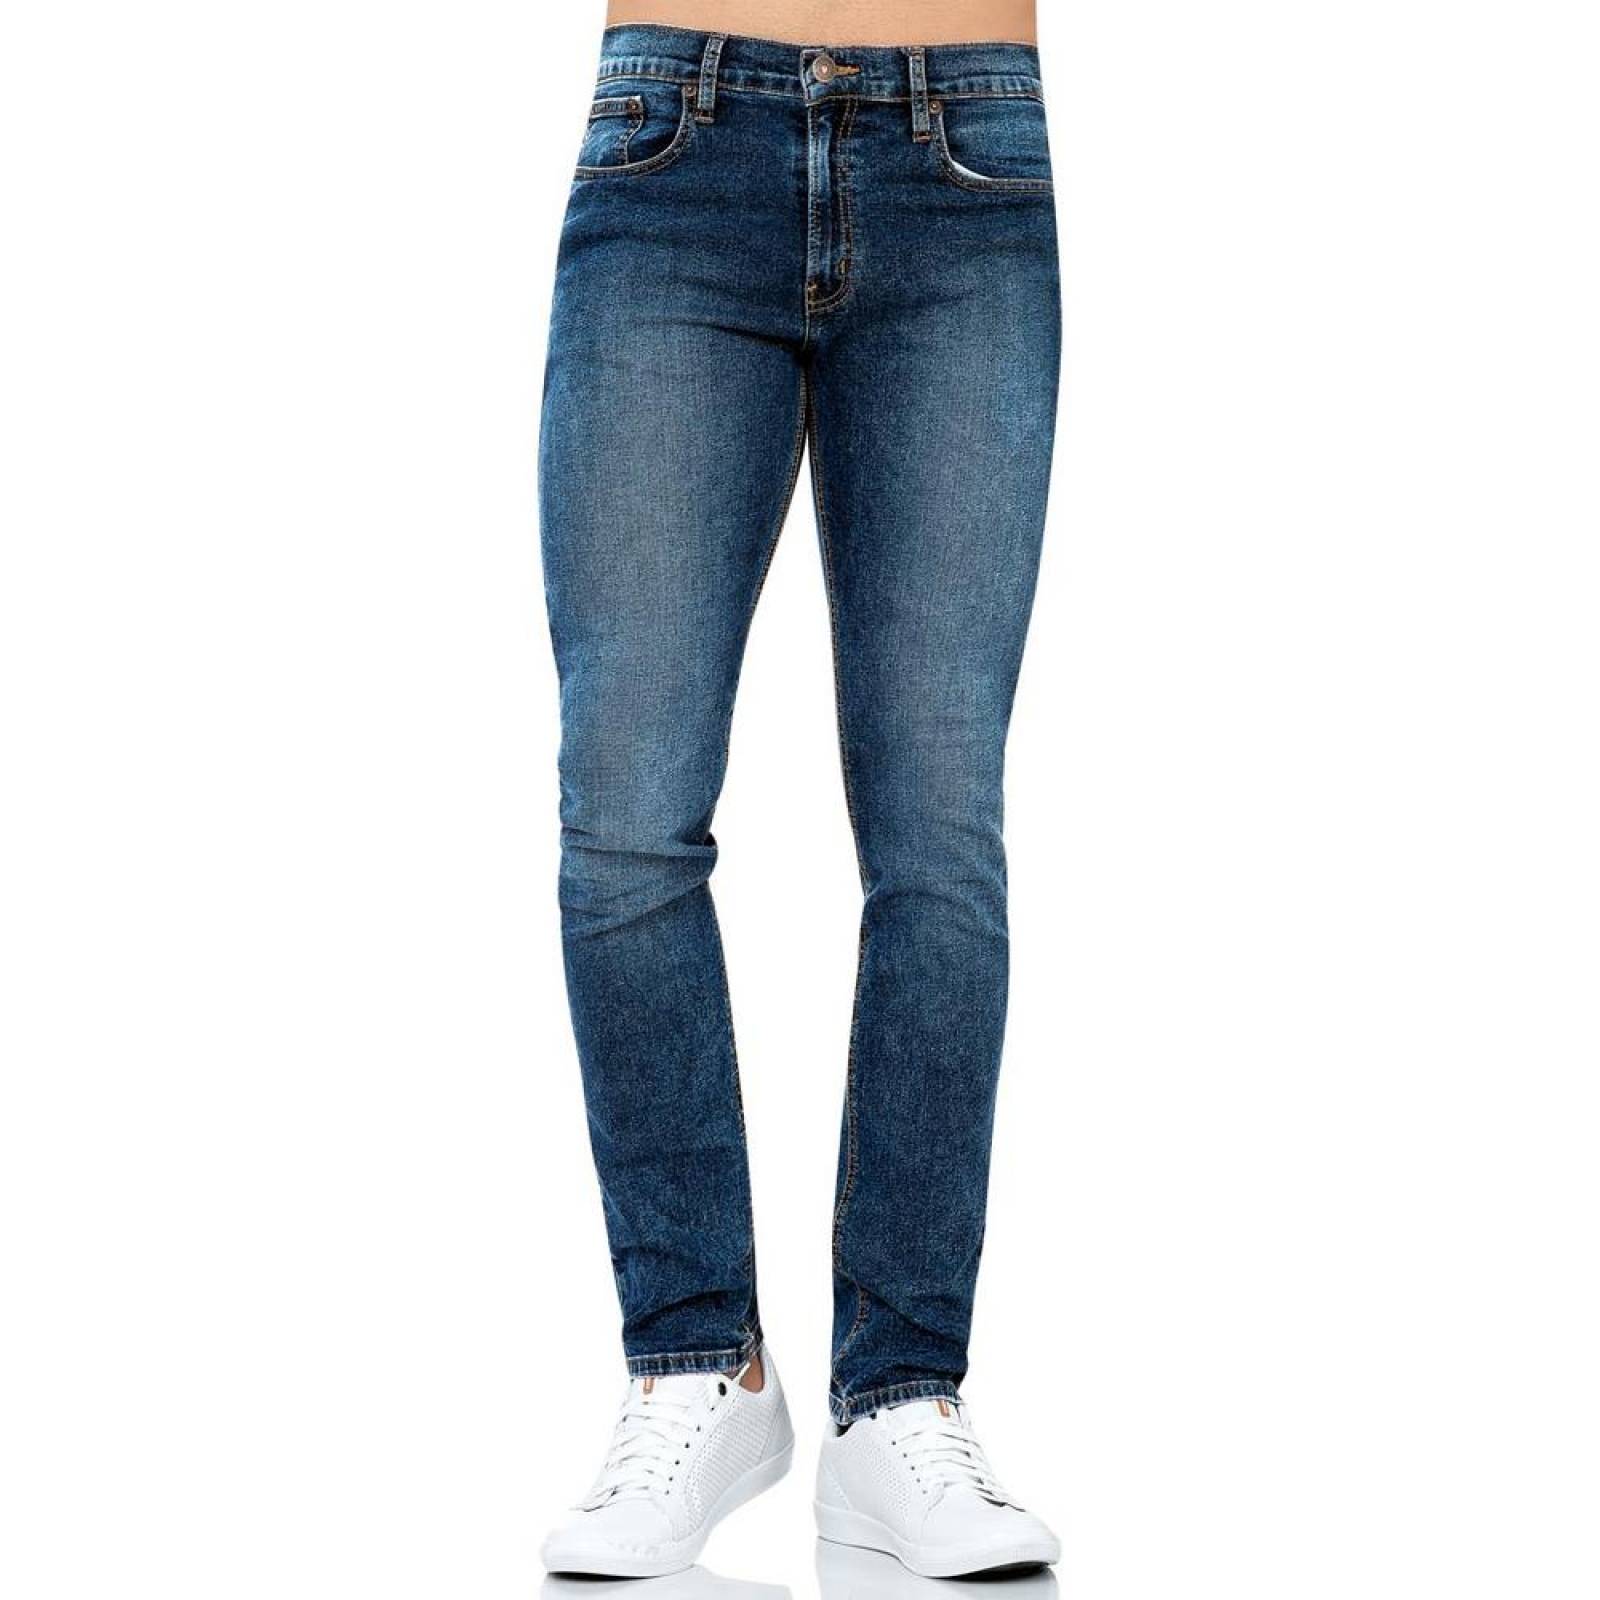 Jeans Oggi Jeans Hombre Azul Mezclilla-Stretch Risk 